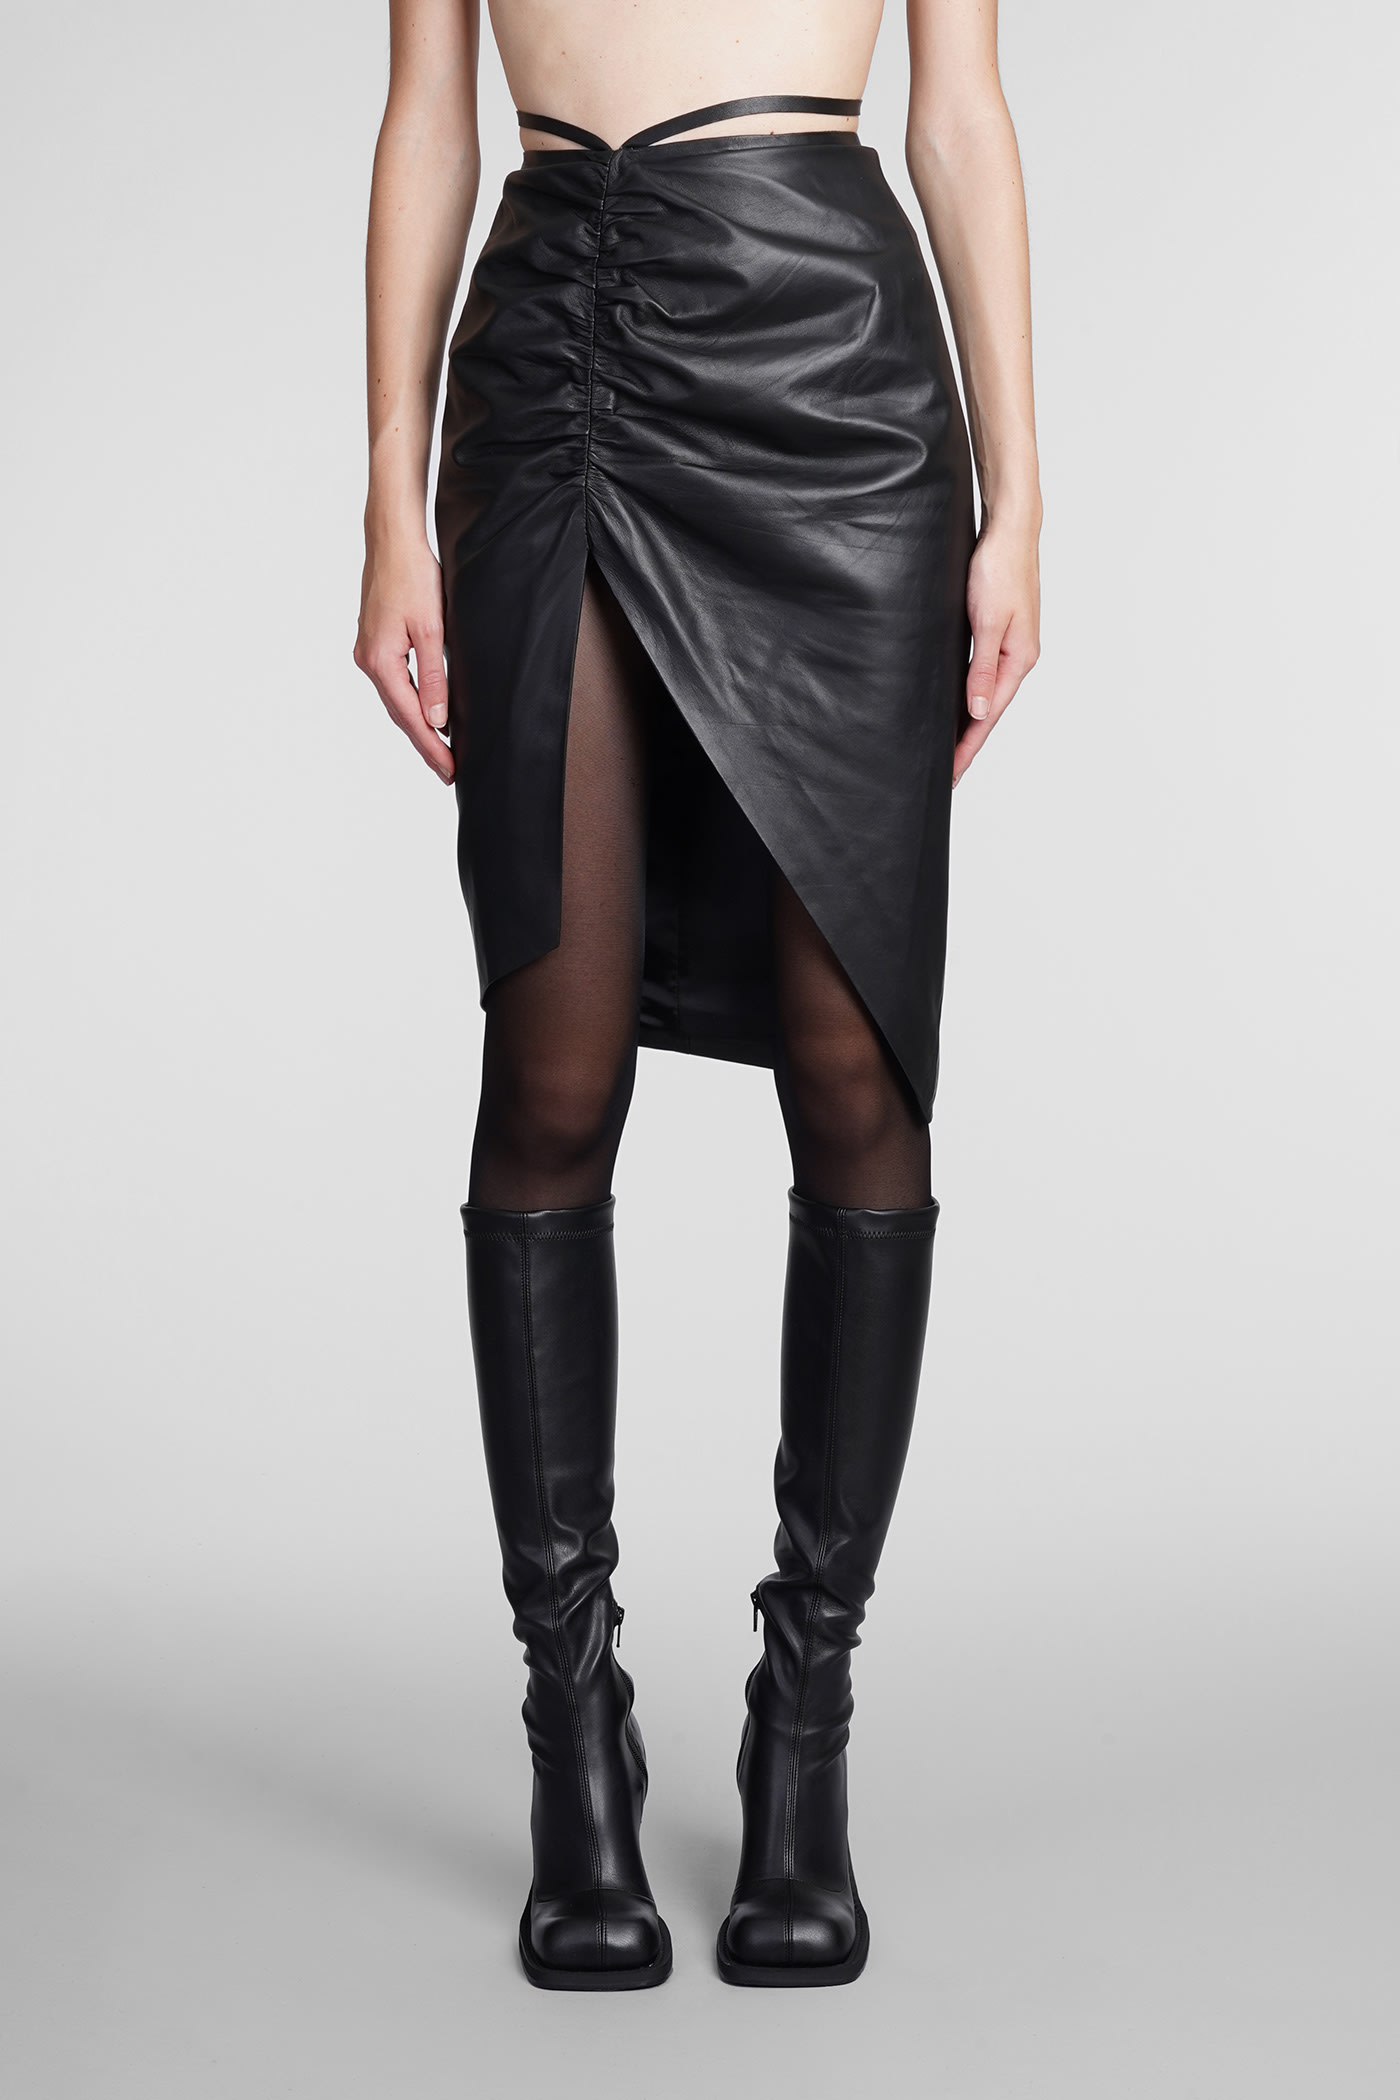 ANDREADAMO Skirt In Black Leather